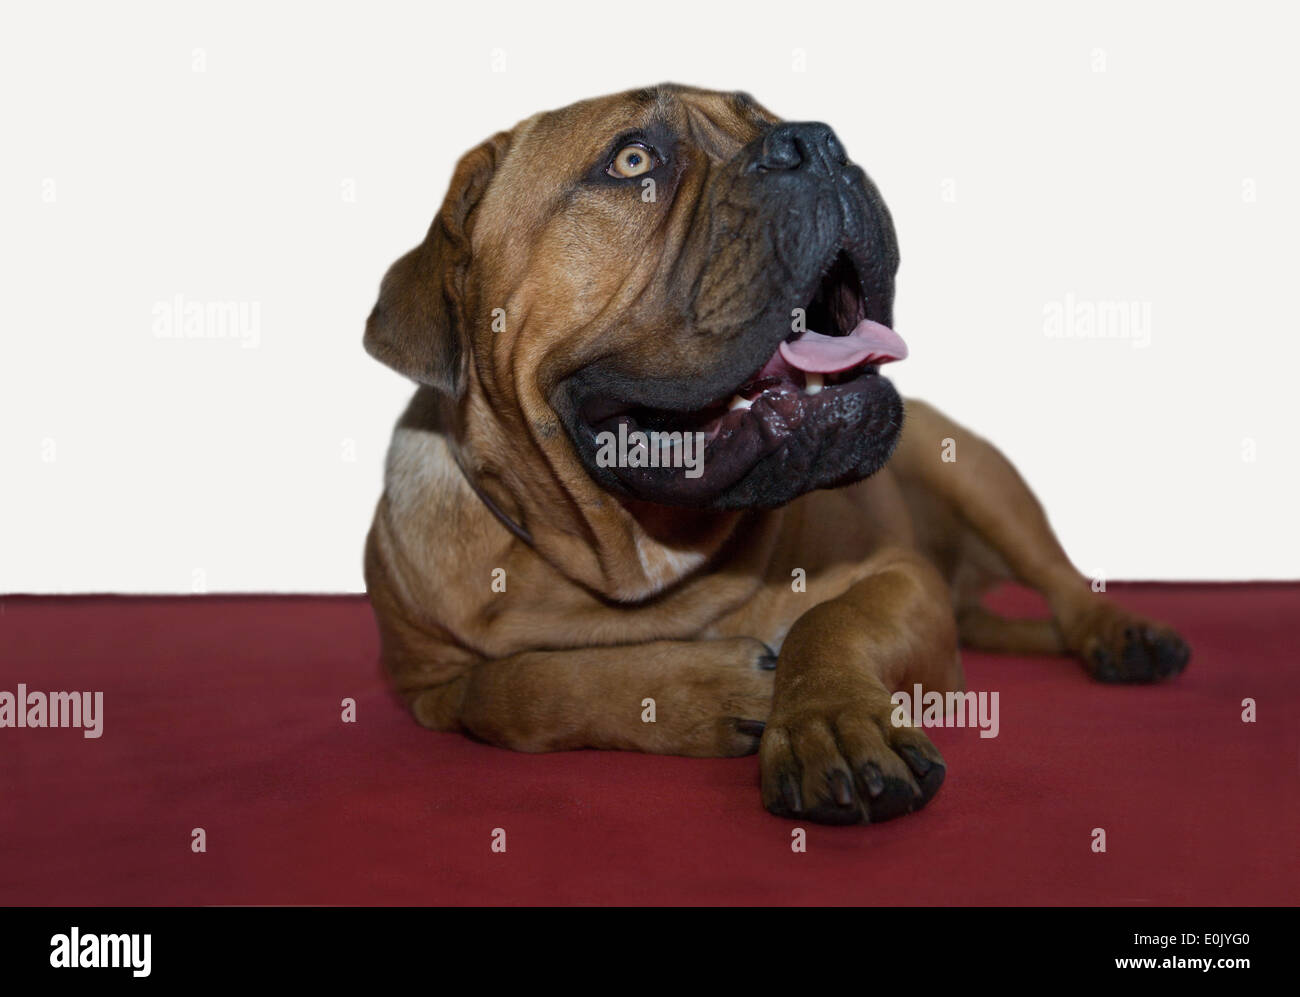 A big beautiful Bullmastiff dog portrait lying on red carpet Stock Photo